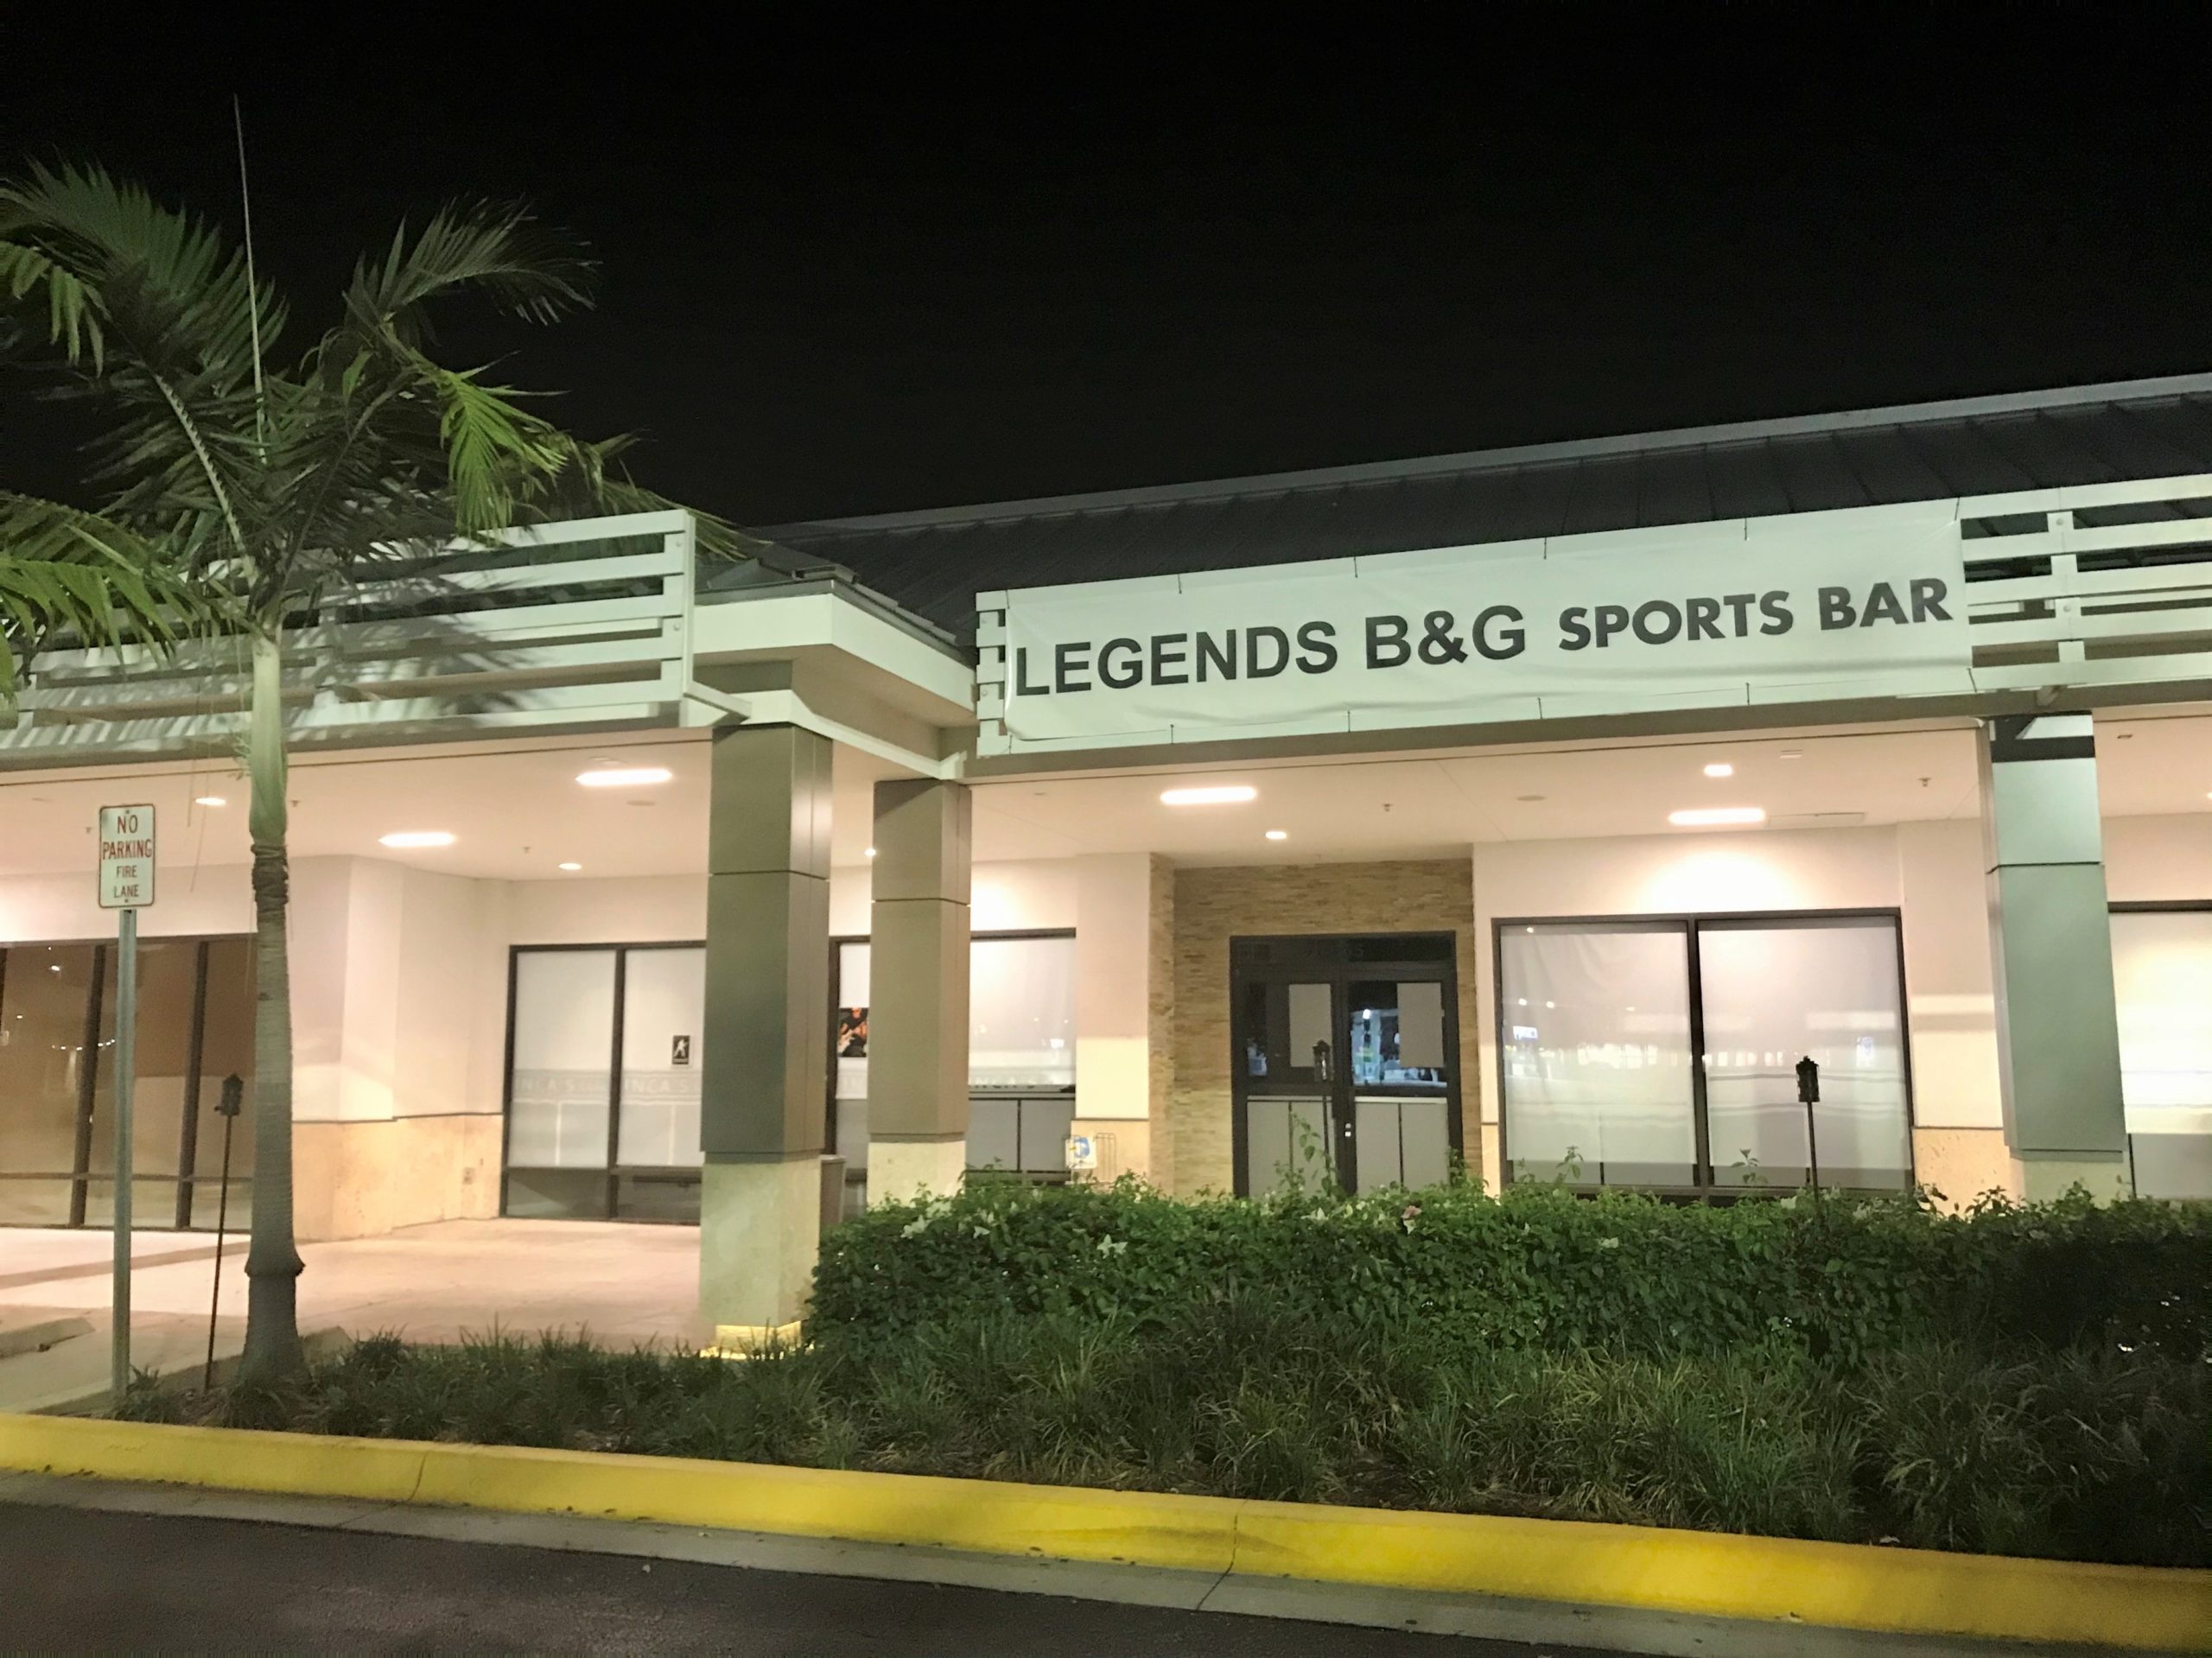 Legends Sports Bar – The First Modern Sports Bar in America